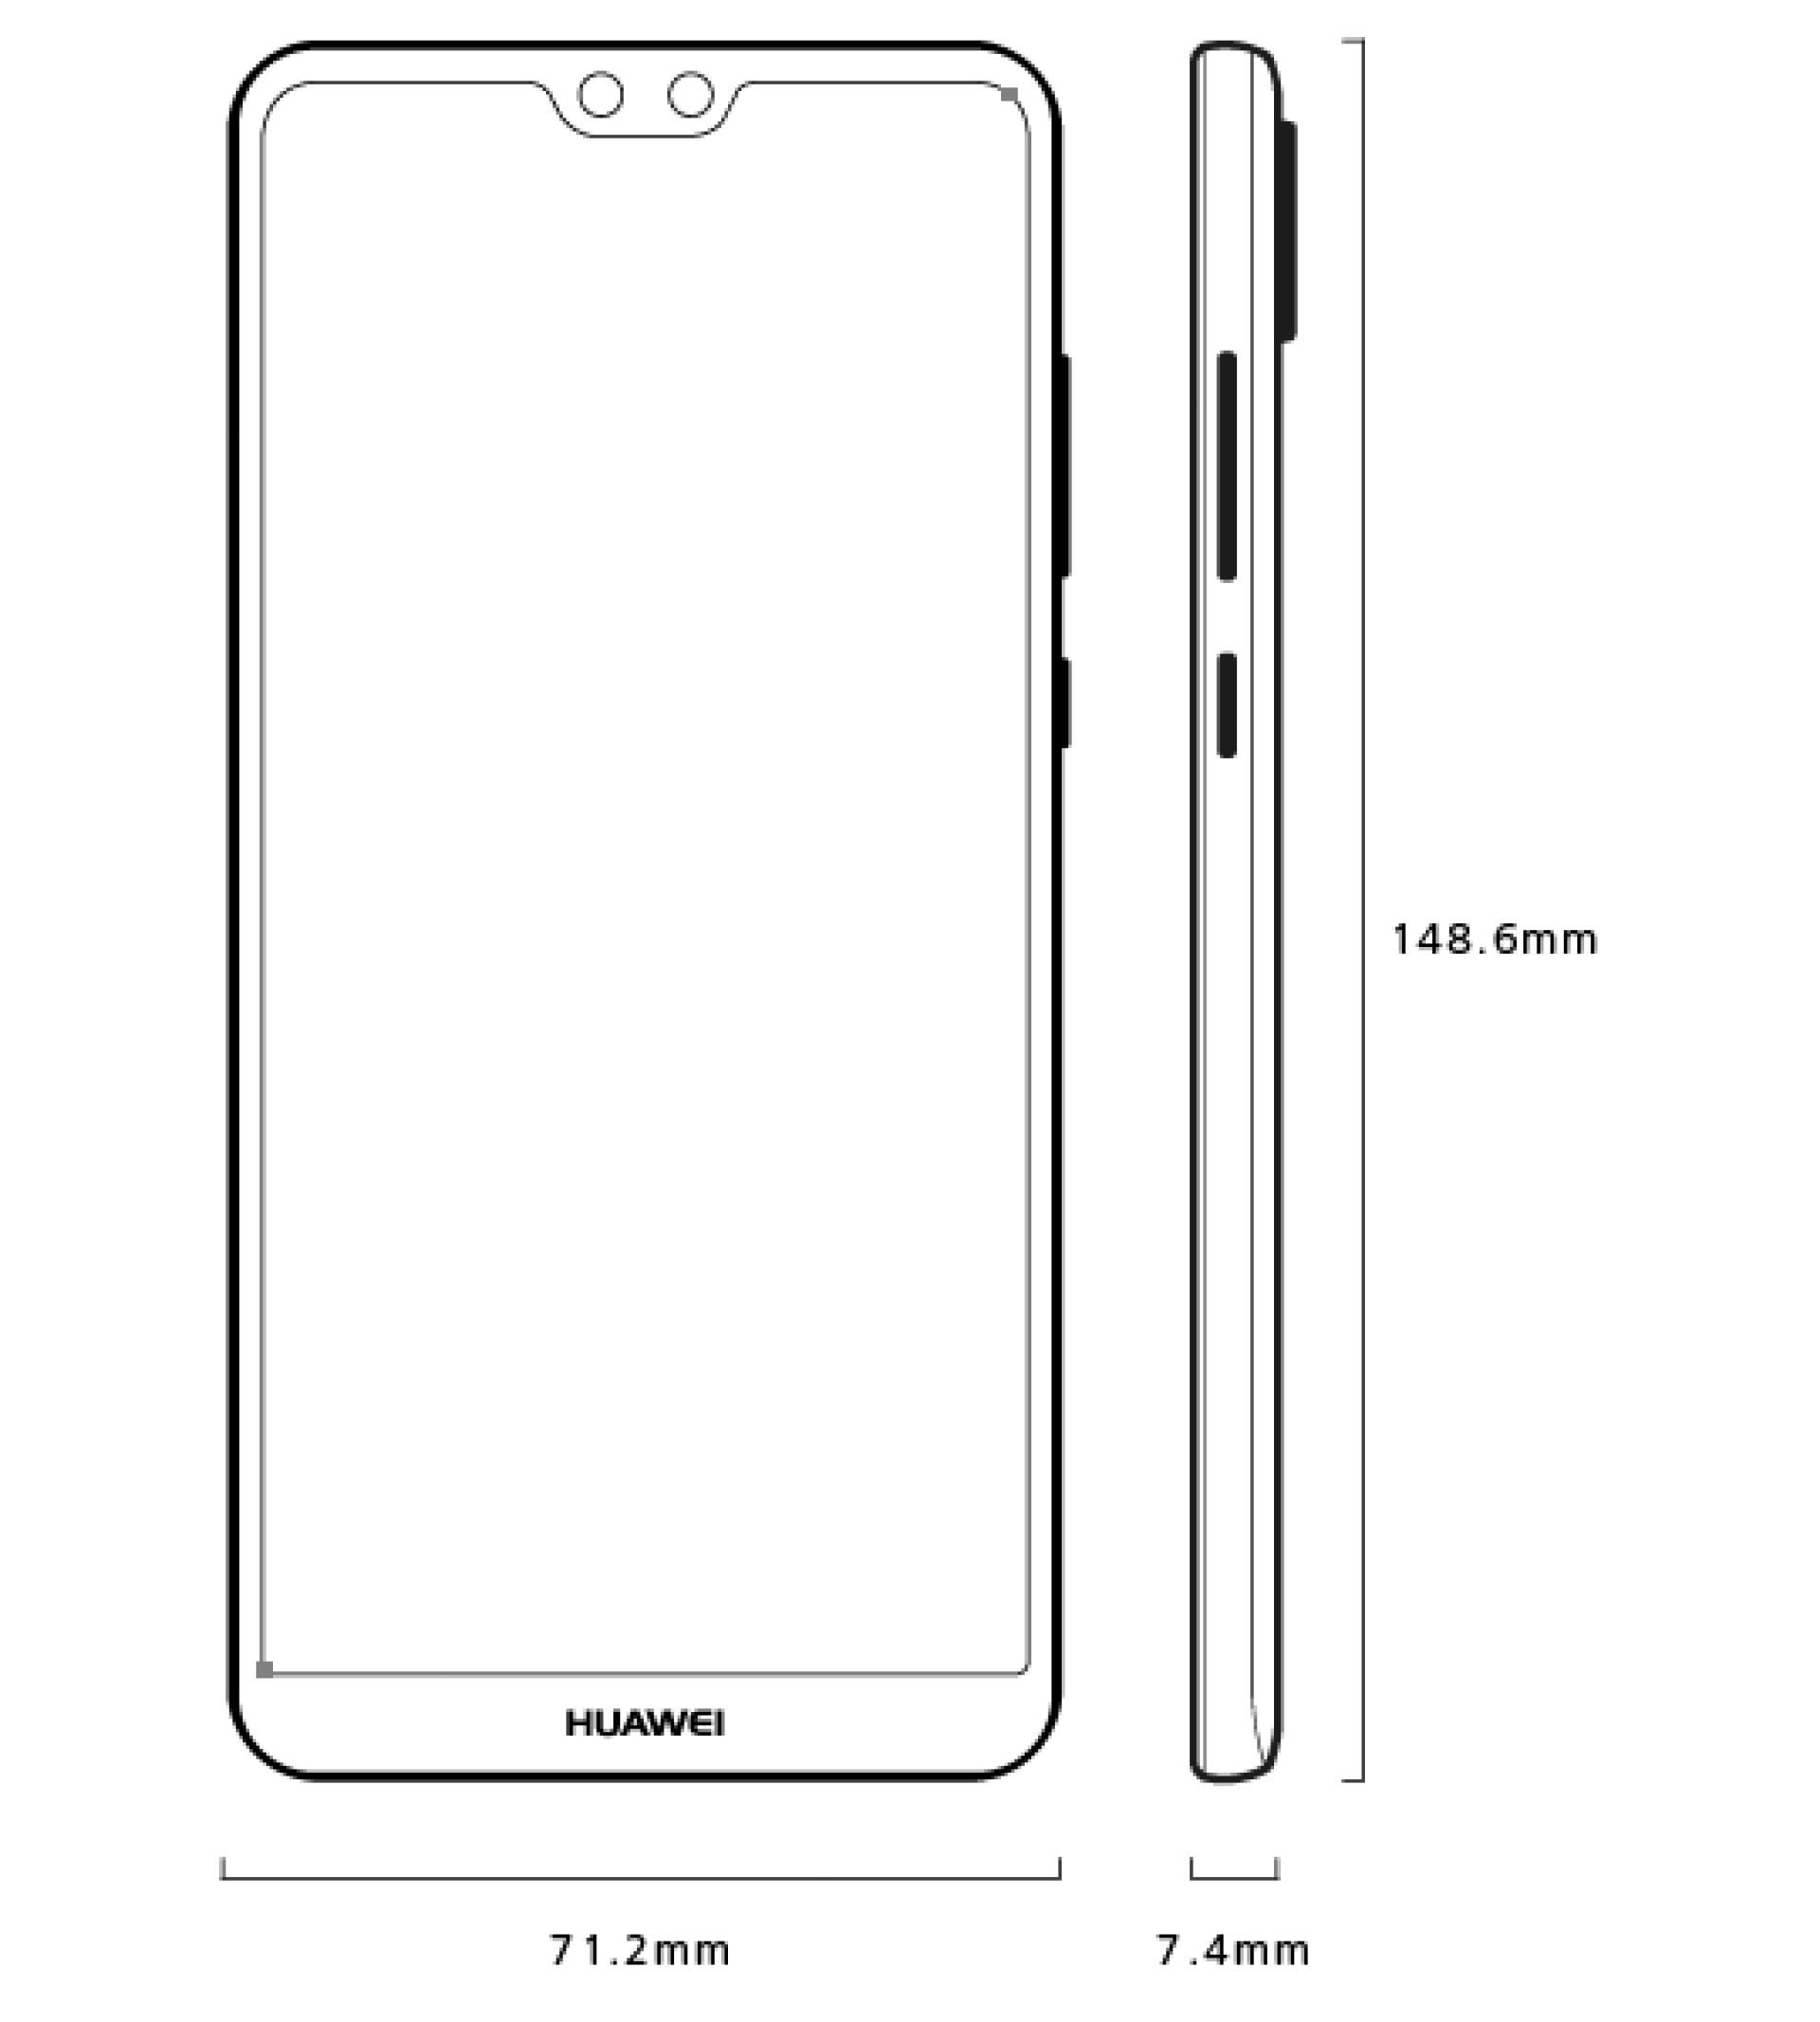 Honor 20 размеры. Huawei p20 Lite Размеры. Хуавей п20 Лайт размер дисплея. Размер телефона Хуавей р20 Лайт. Хуавей п 20 Лайт размер экрана.